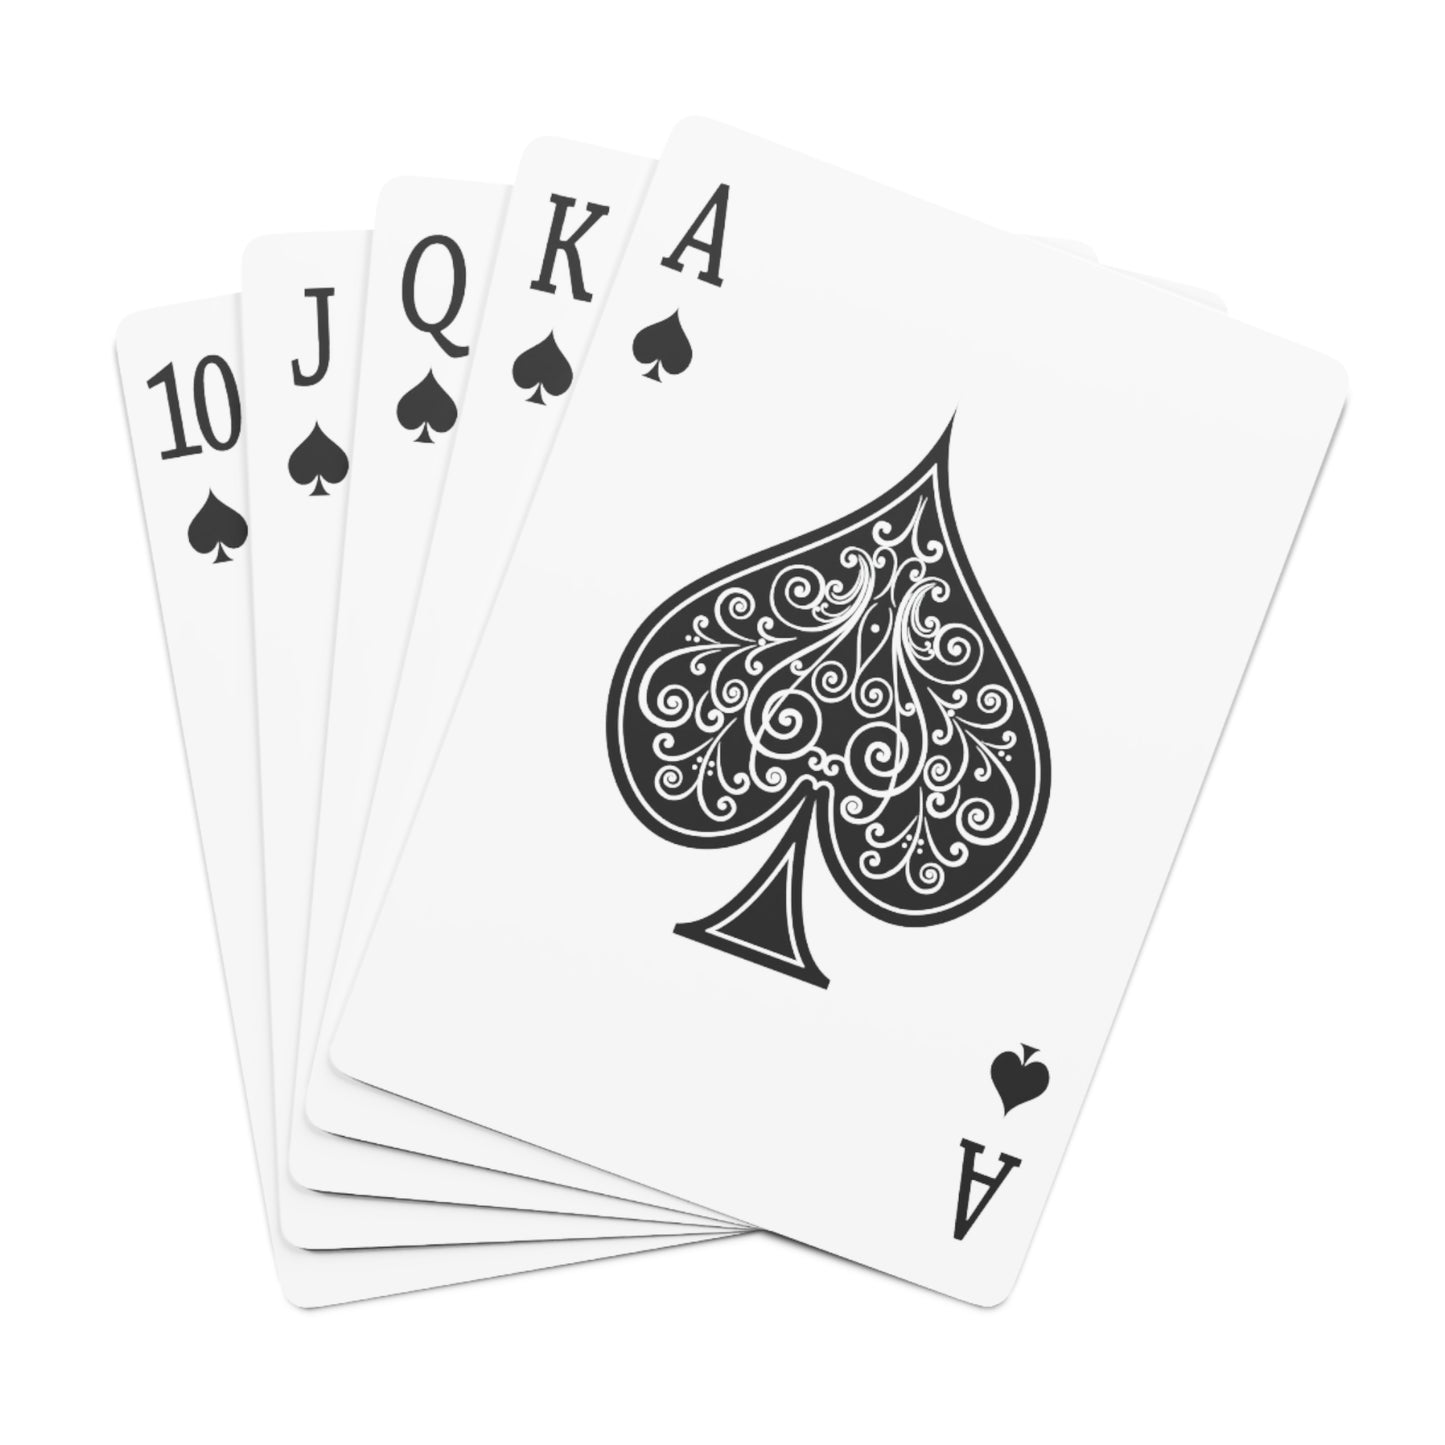 ANACORTES SMOOTH SAILING  Poker Cards